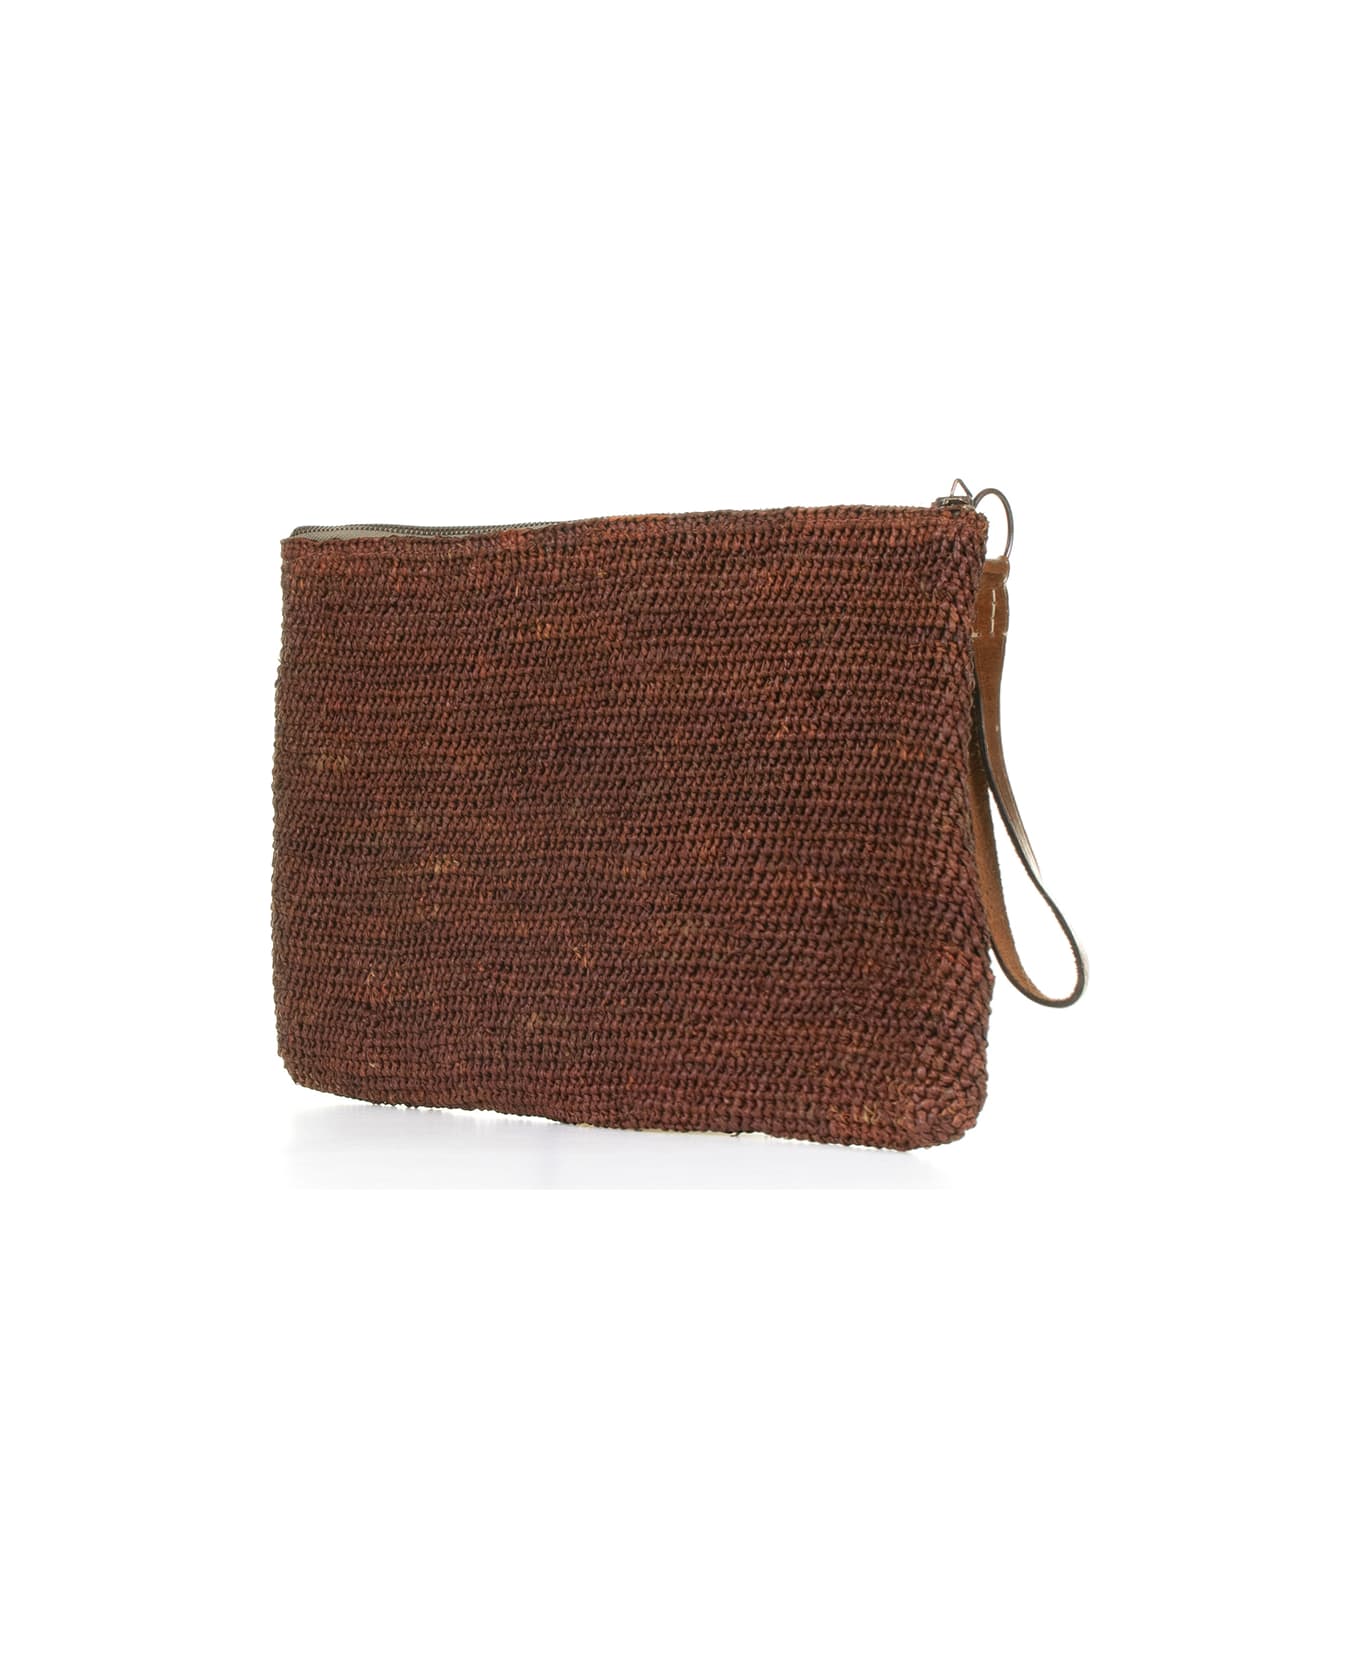 Ibeliv Ampy Clutch Bag In Brown Raffia - WOOD